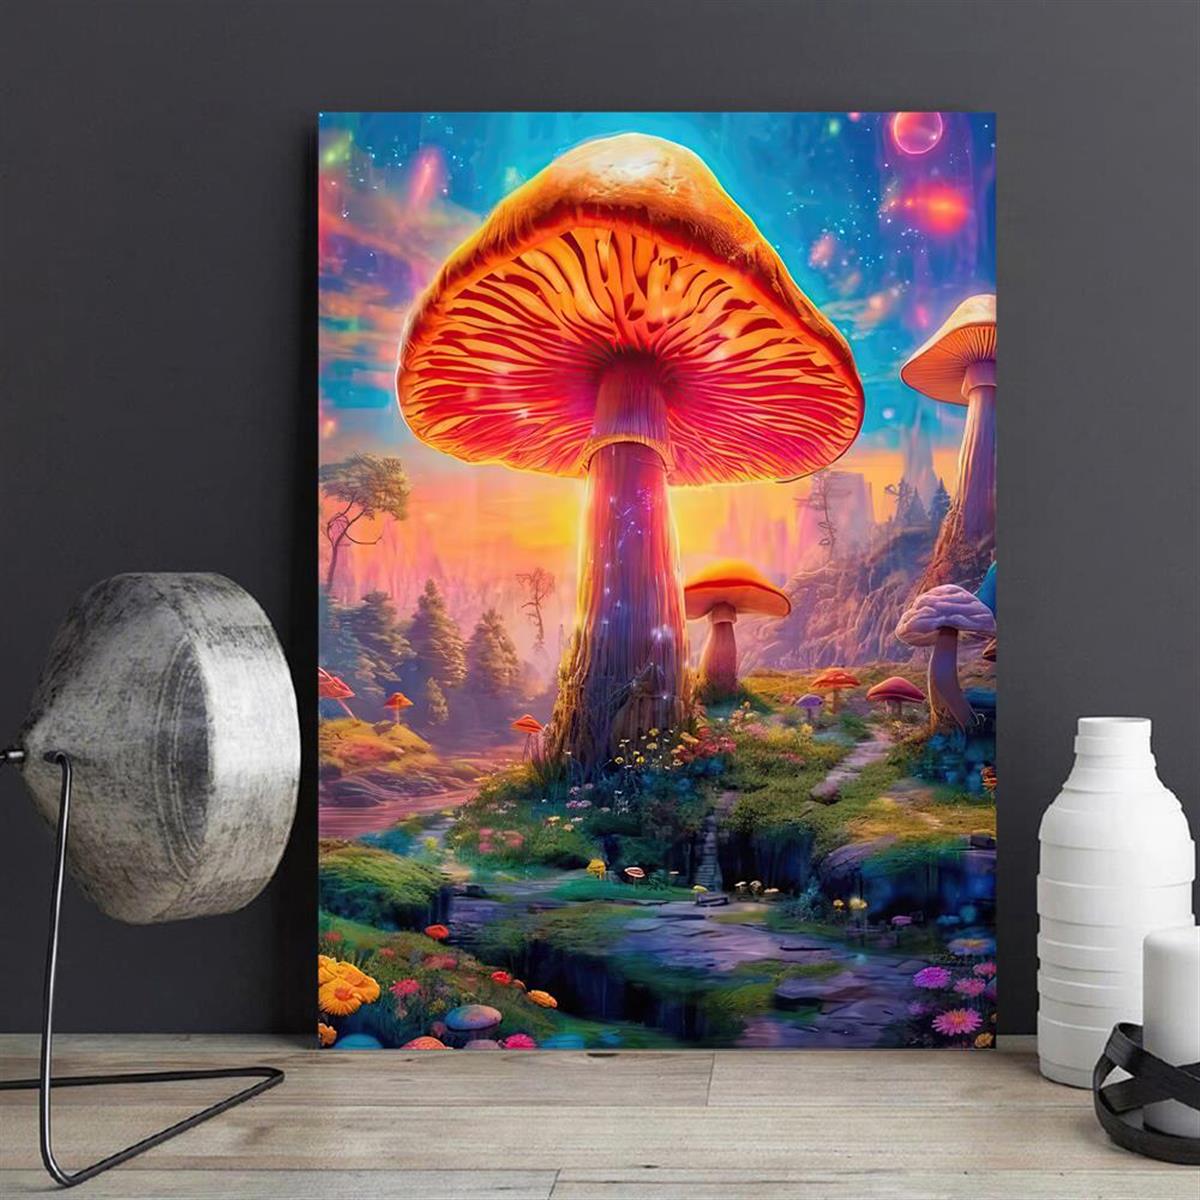 8x10 Canvas Painting Print • Wall decor• Digital Print • Mushroom Decor •  Colorful • Wall Art